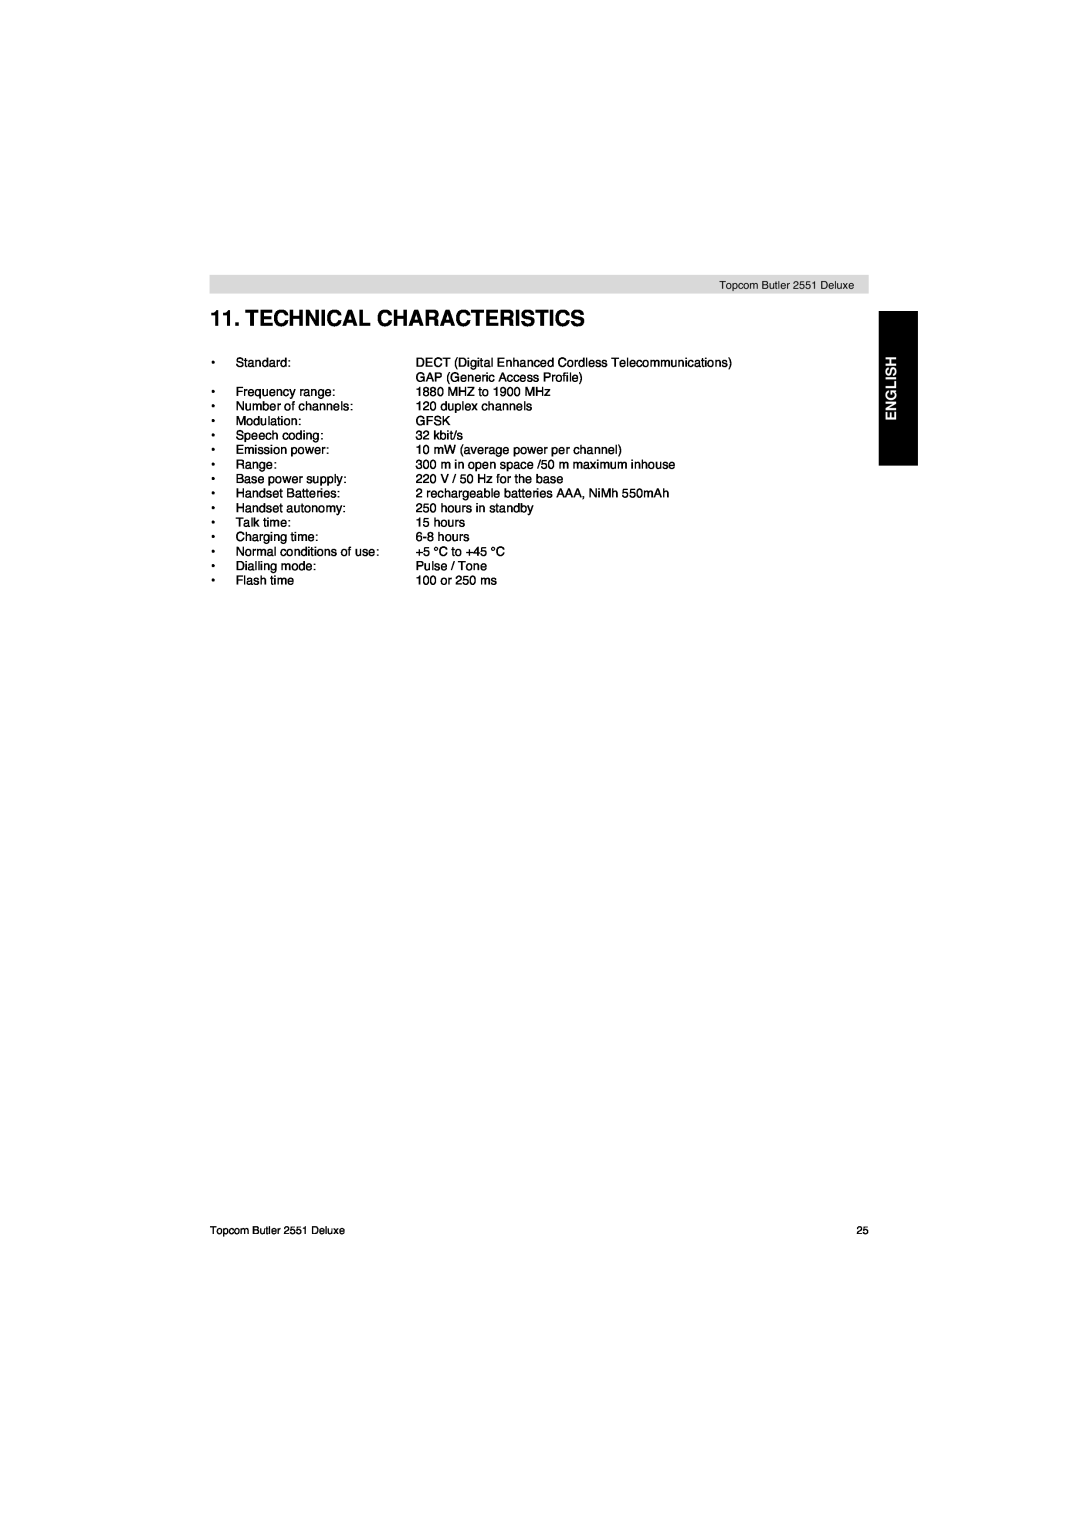 Topcom 2551 manual Technical Characteristics, English 